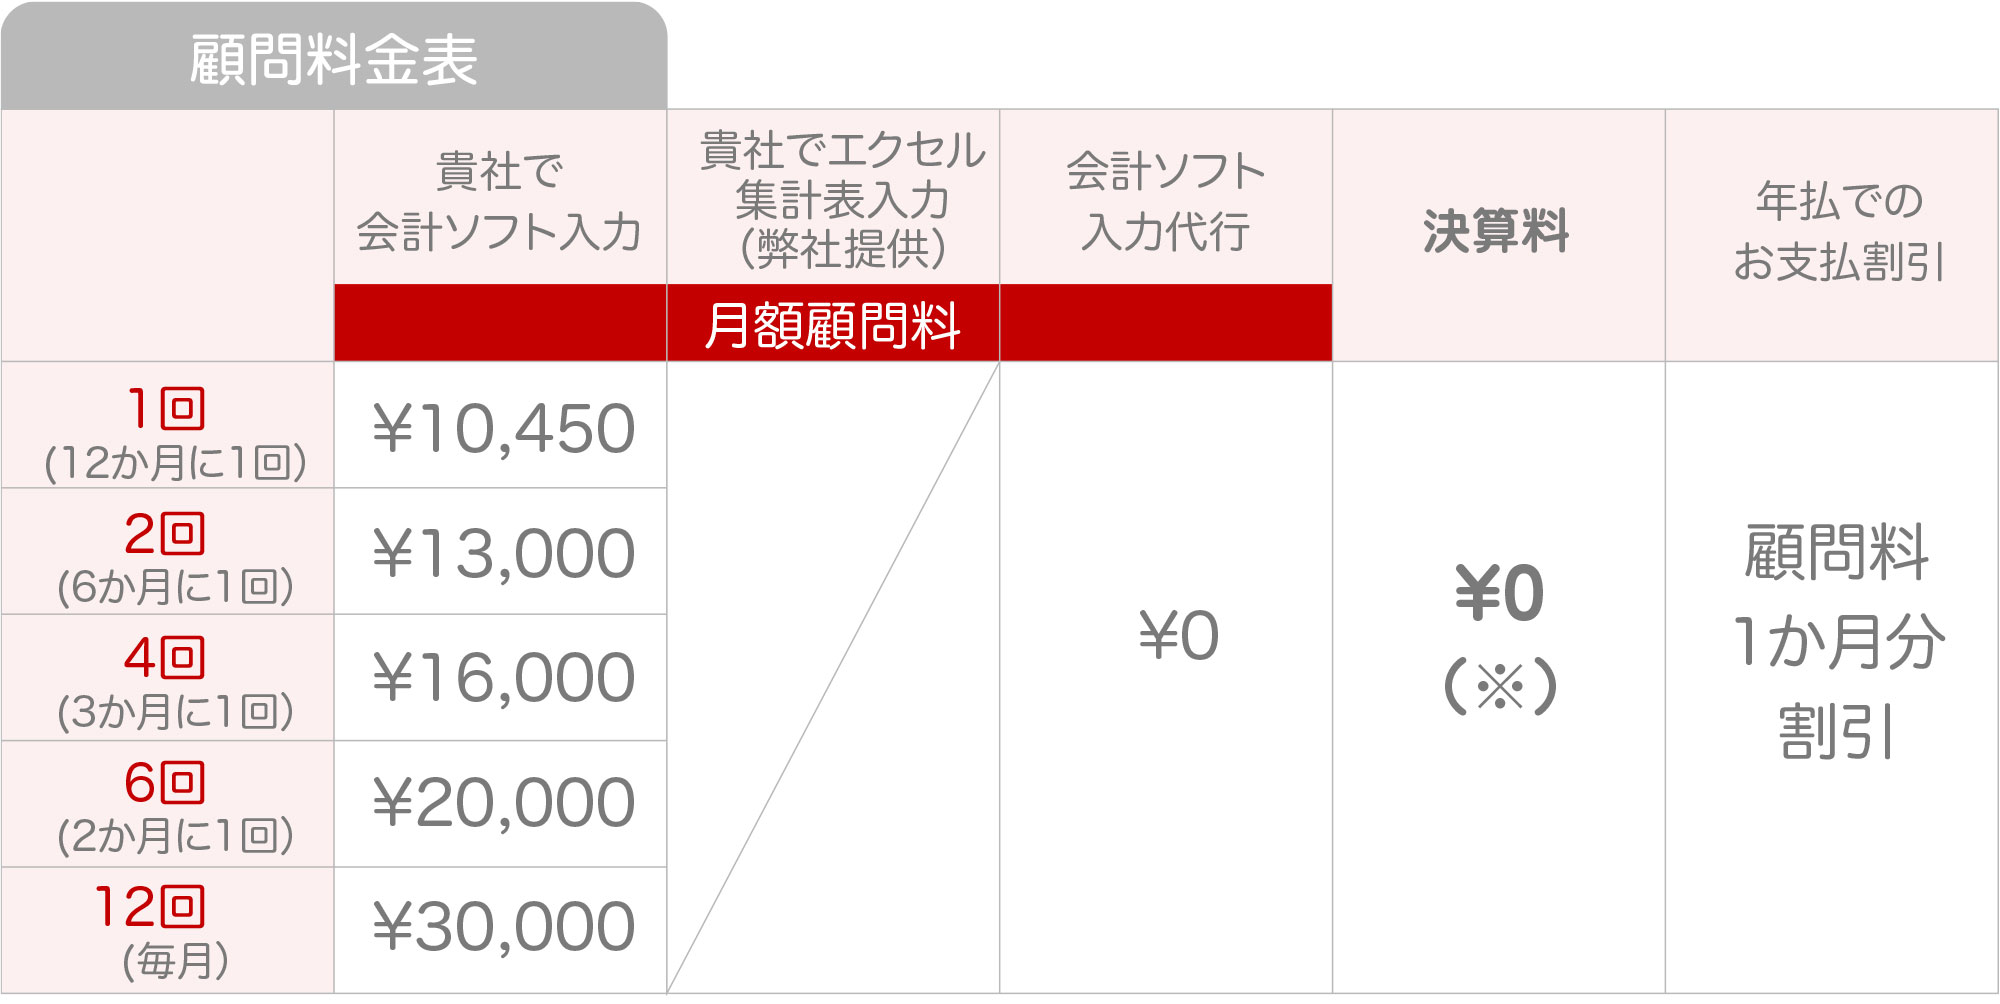 浅野会計事務所の金額・料金案内Bプラン顧問料金表